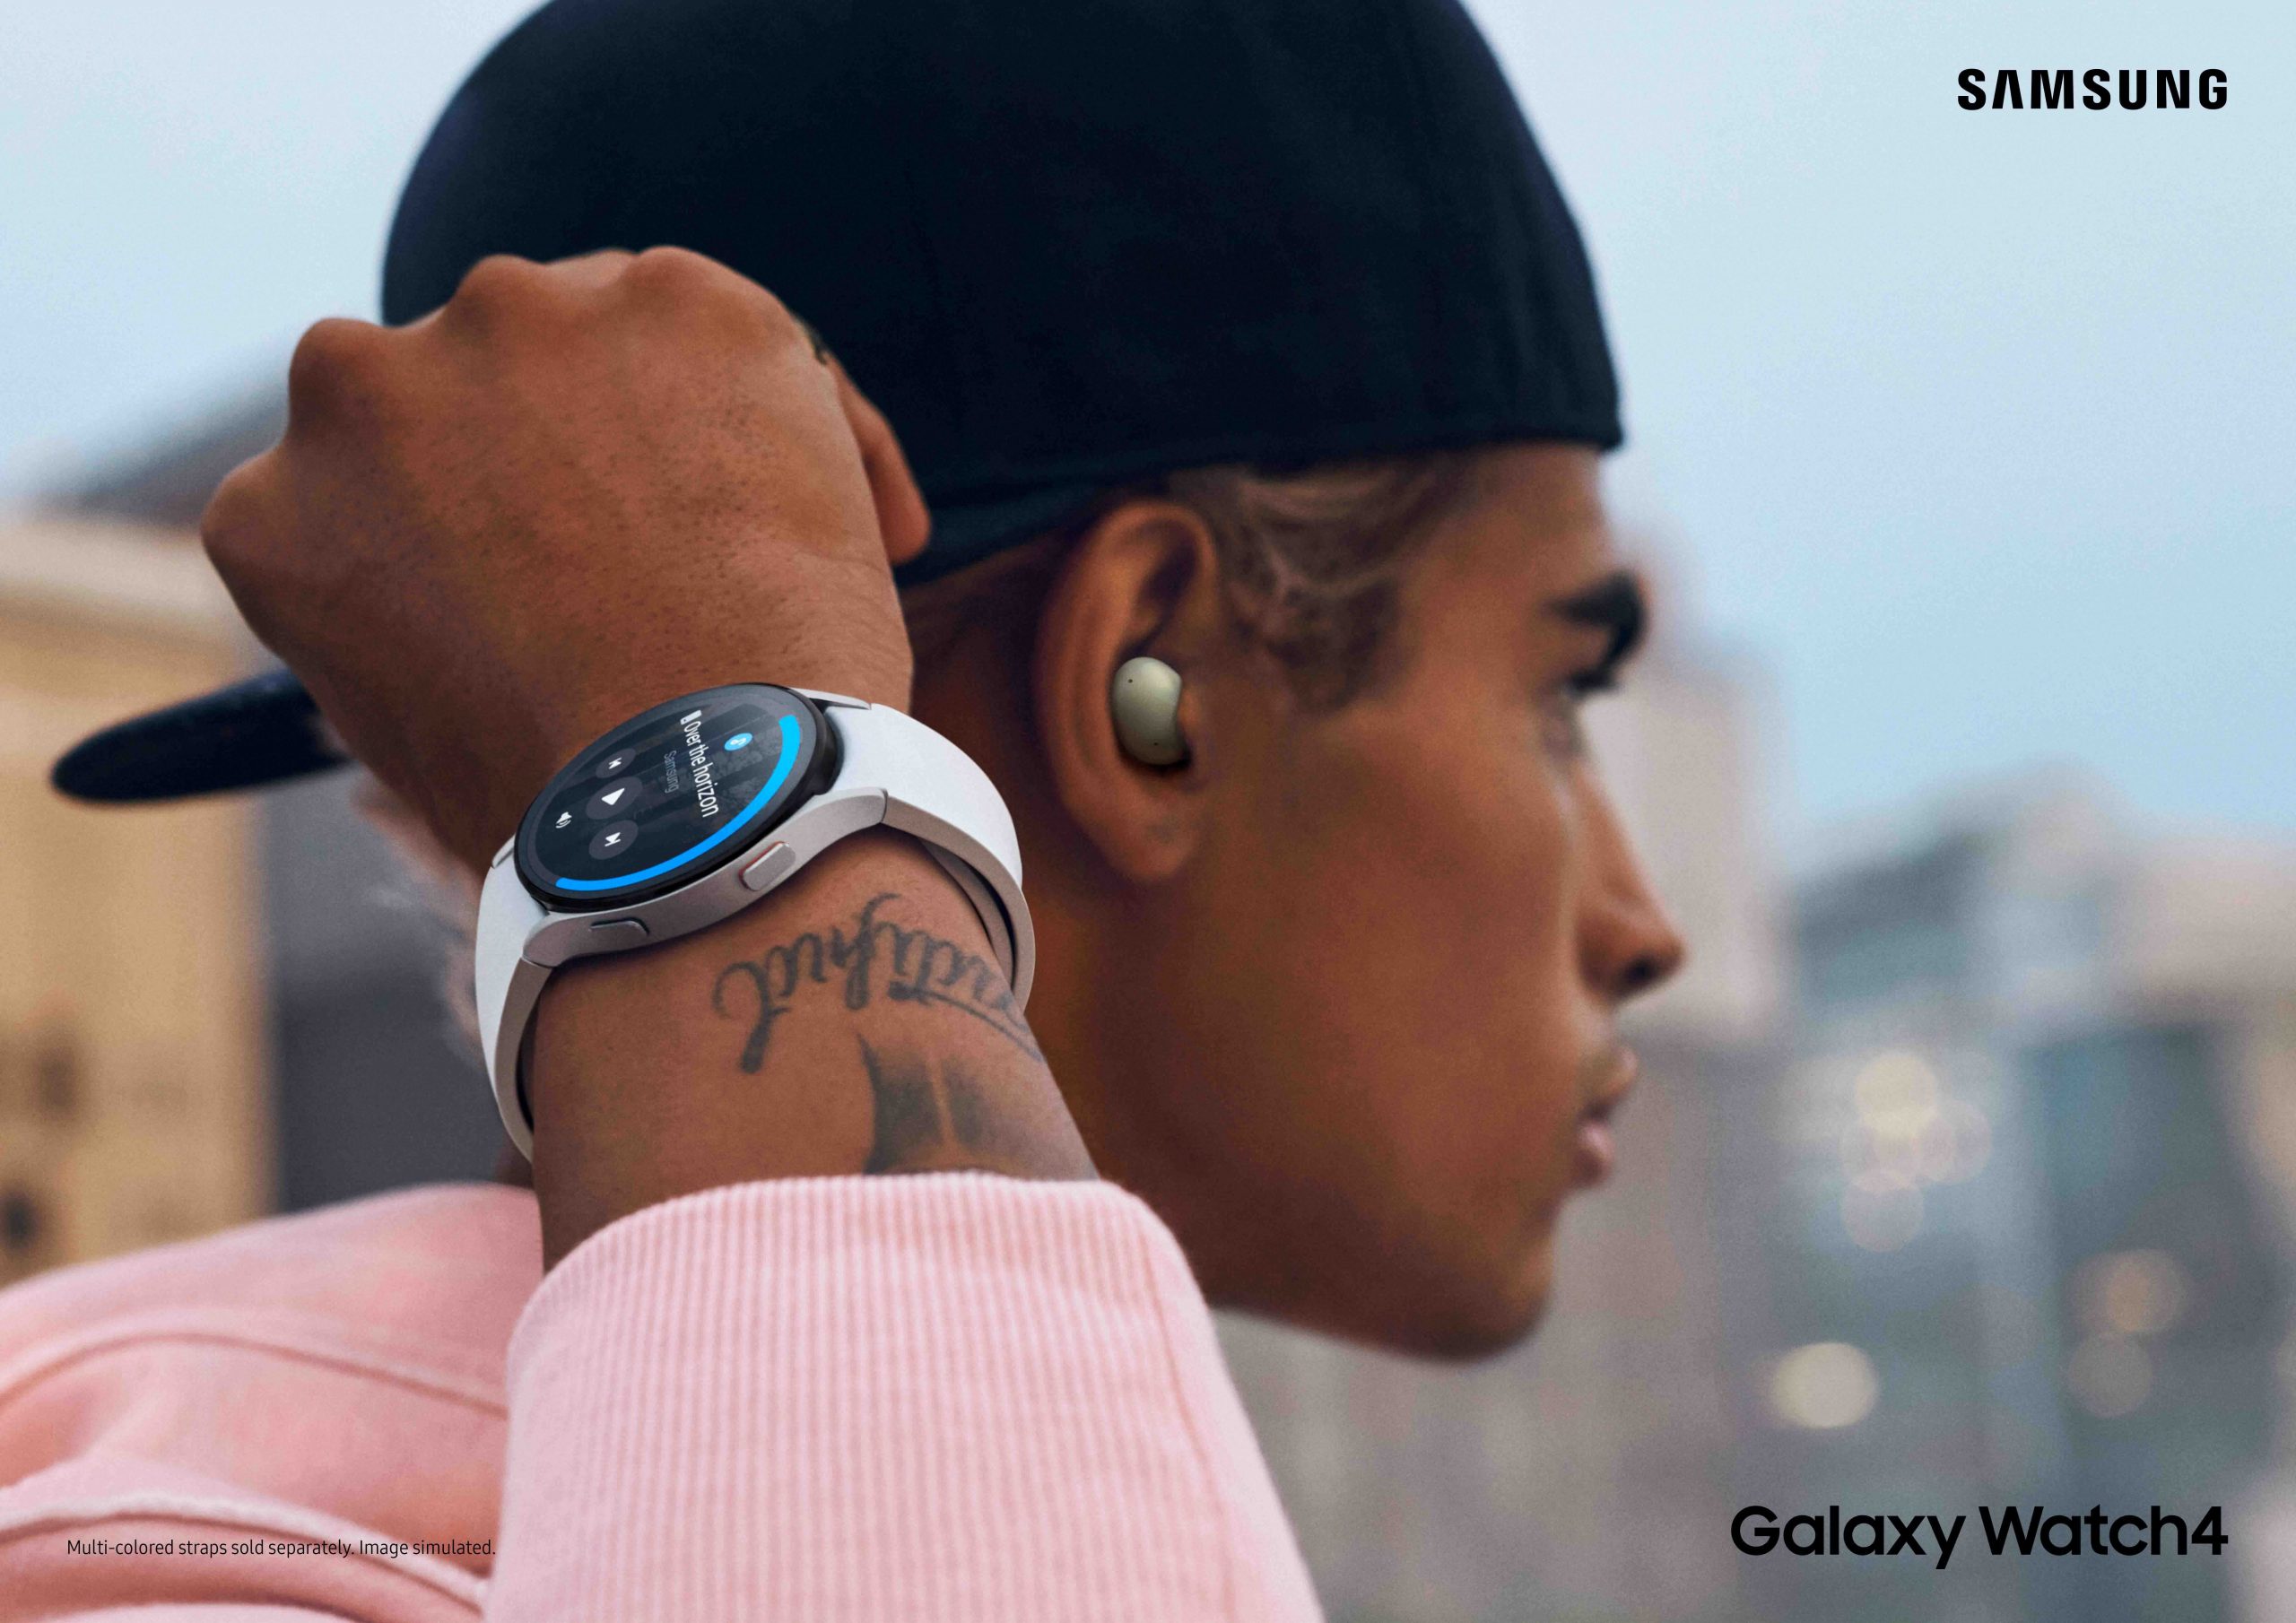 Samsung Galaxy Watch 4 wrist